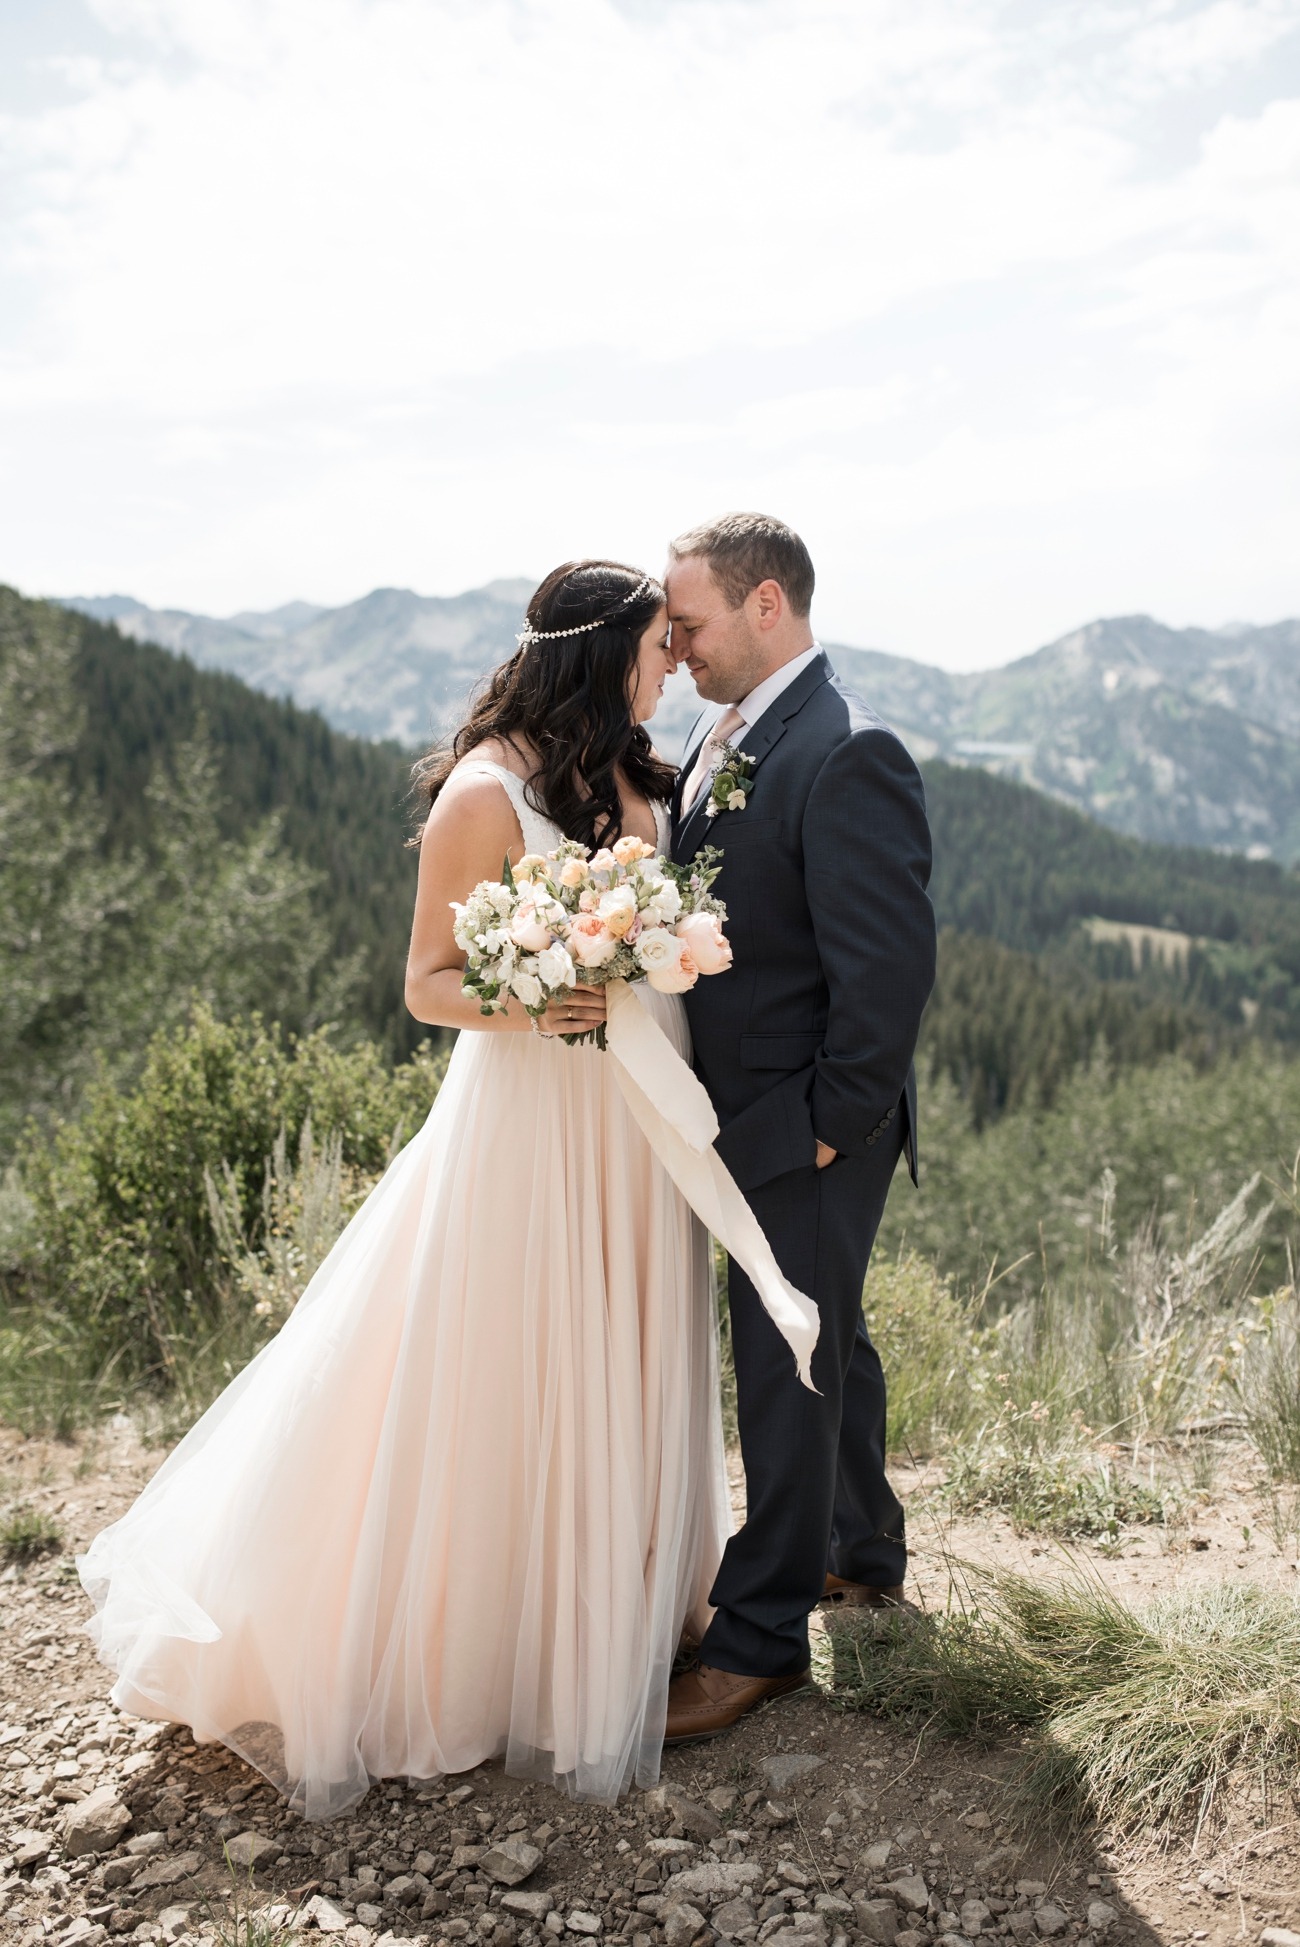 Romantic and Woodsy Mountain Wedding | Ohio Wedding Florist